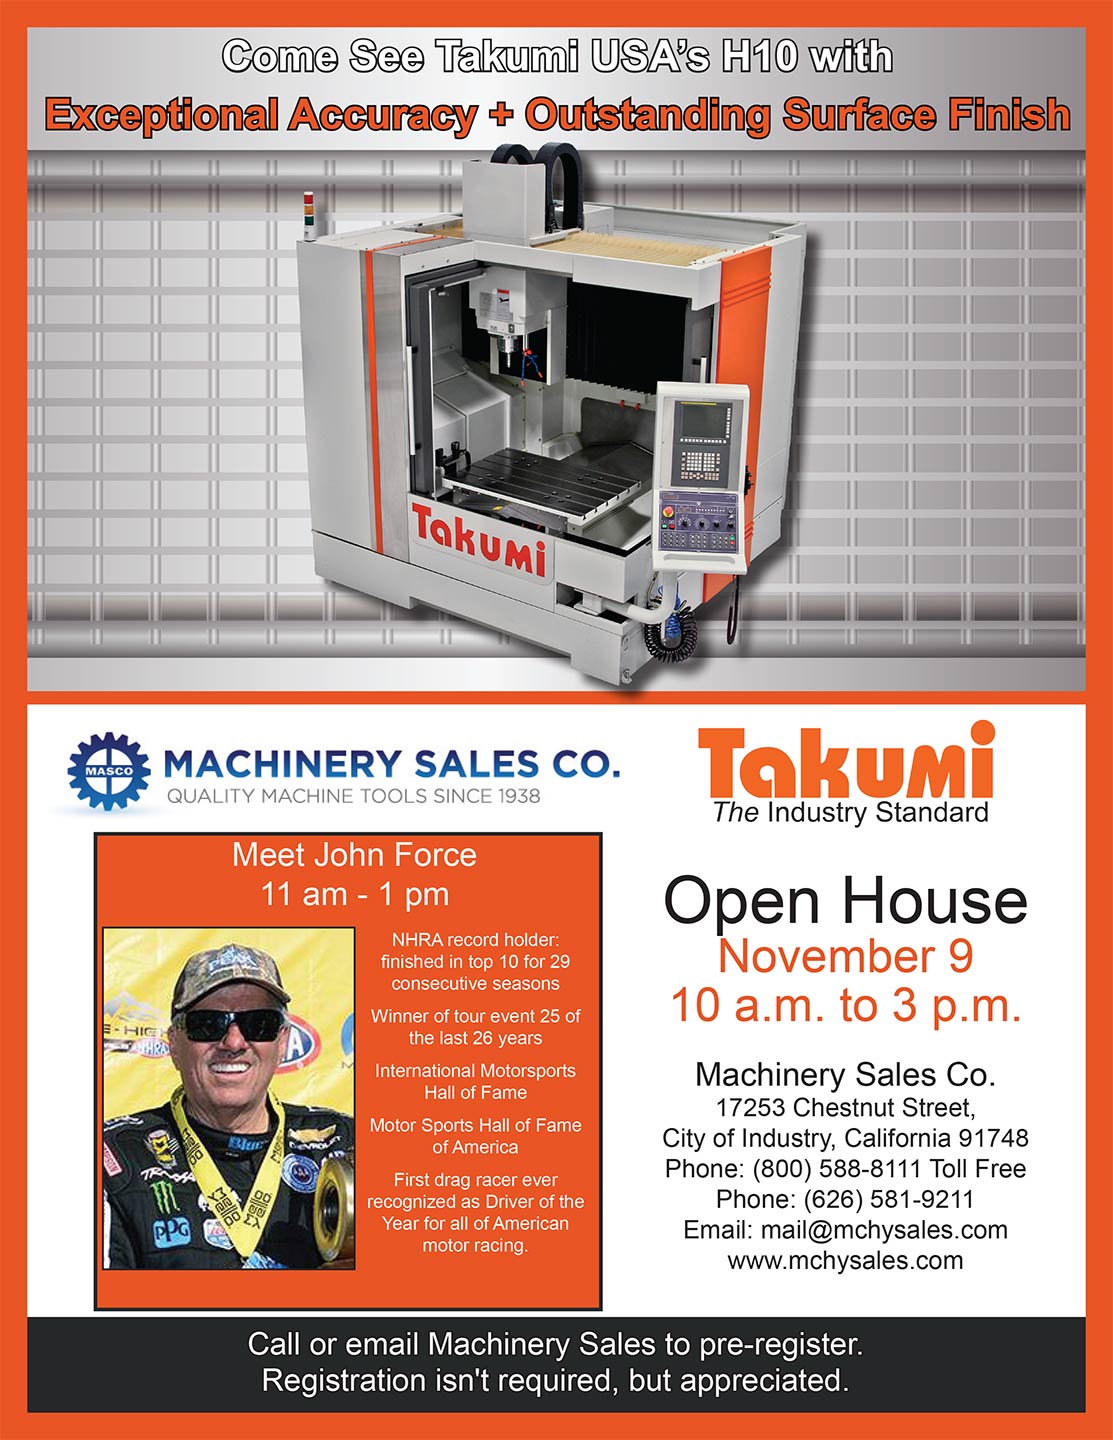 Takumi-USA-MASCO-Open-House-Flyer